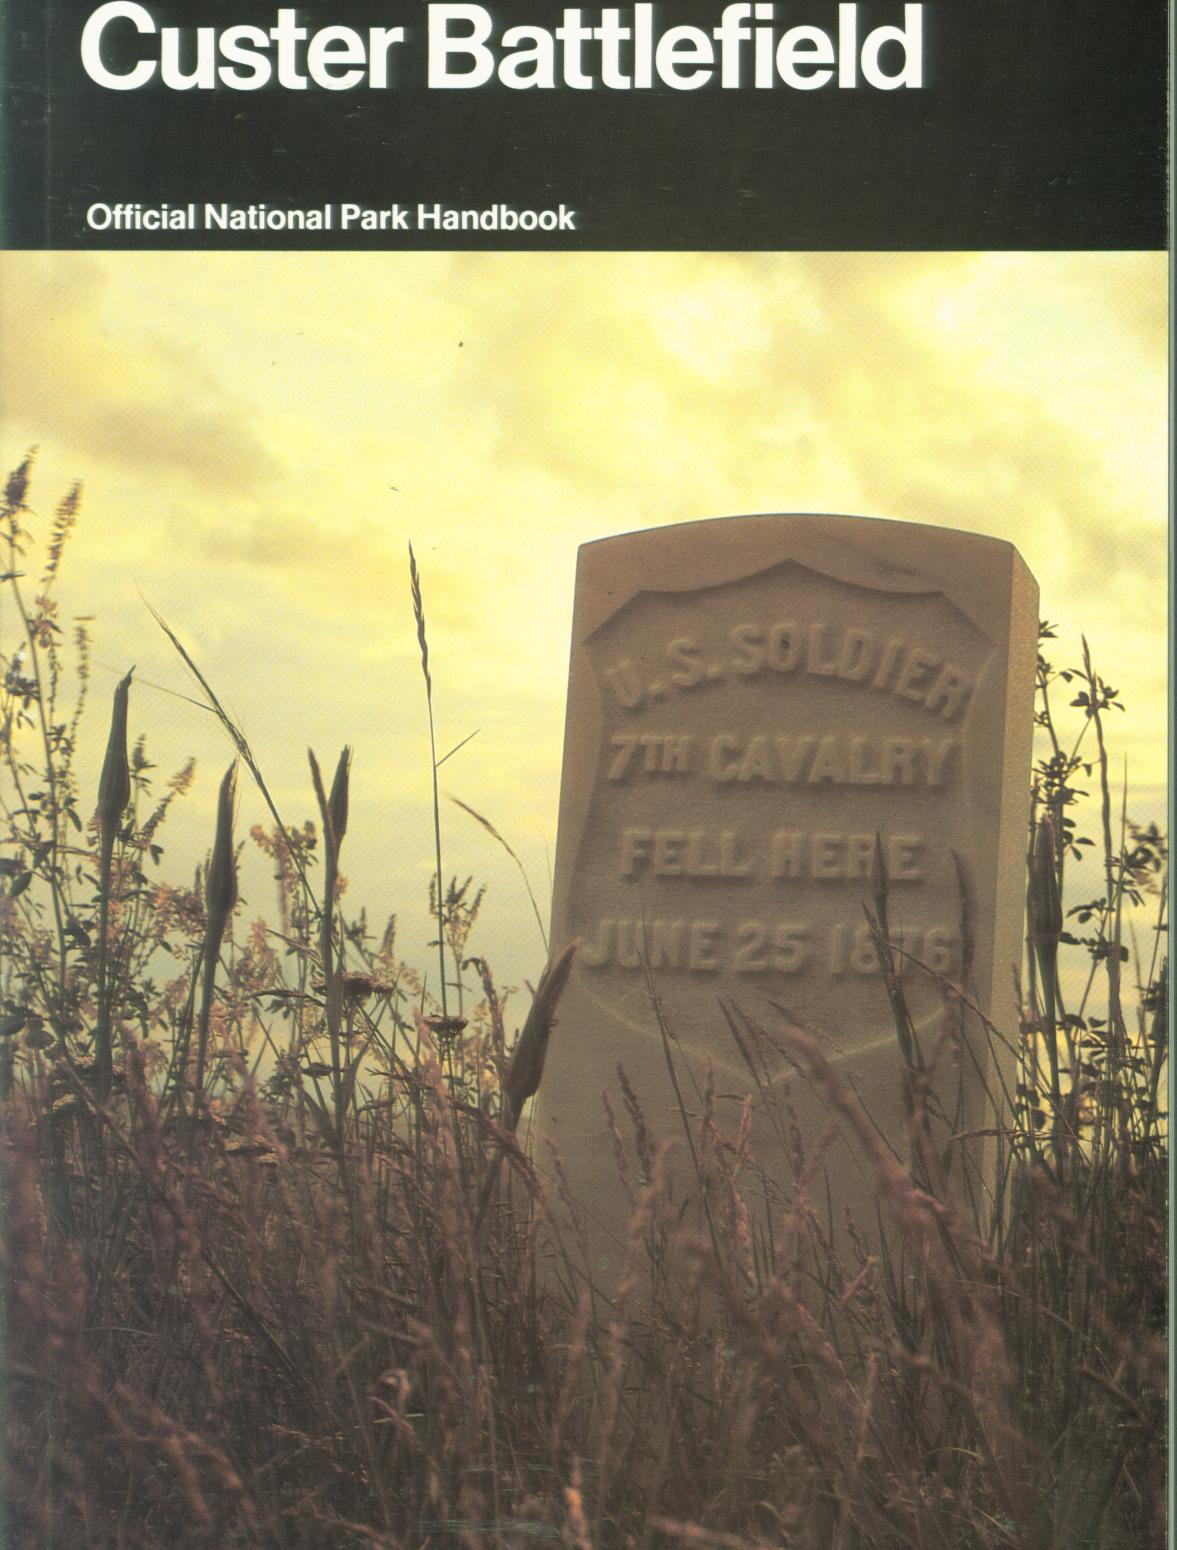 CUSTER BATTLEFIELD (now Battle of Little Bighorn) NATIONAL MONUMENT. 